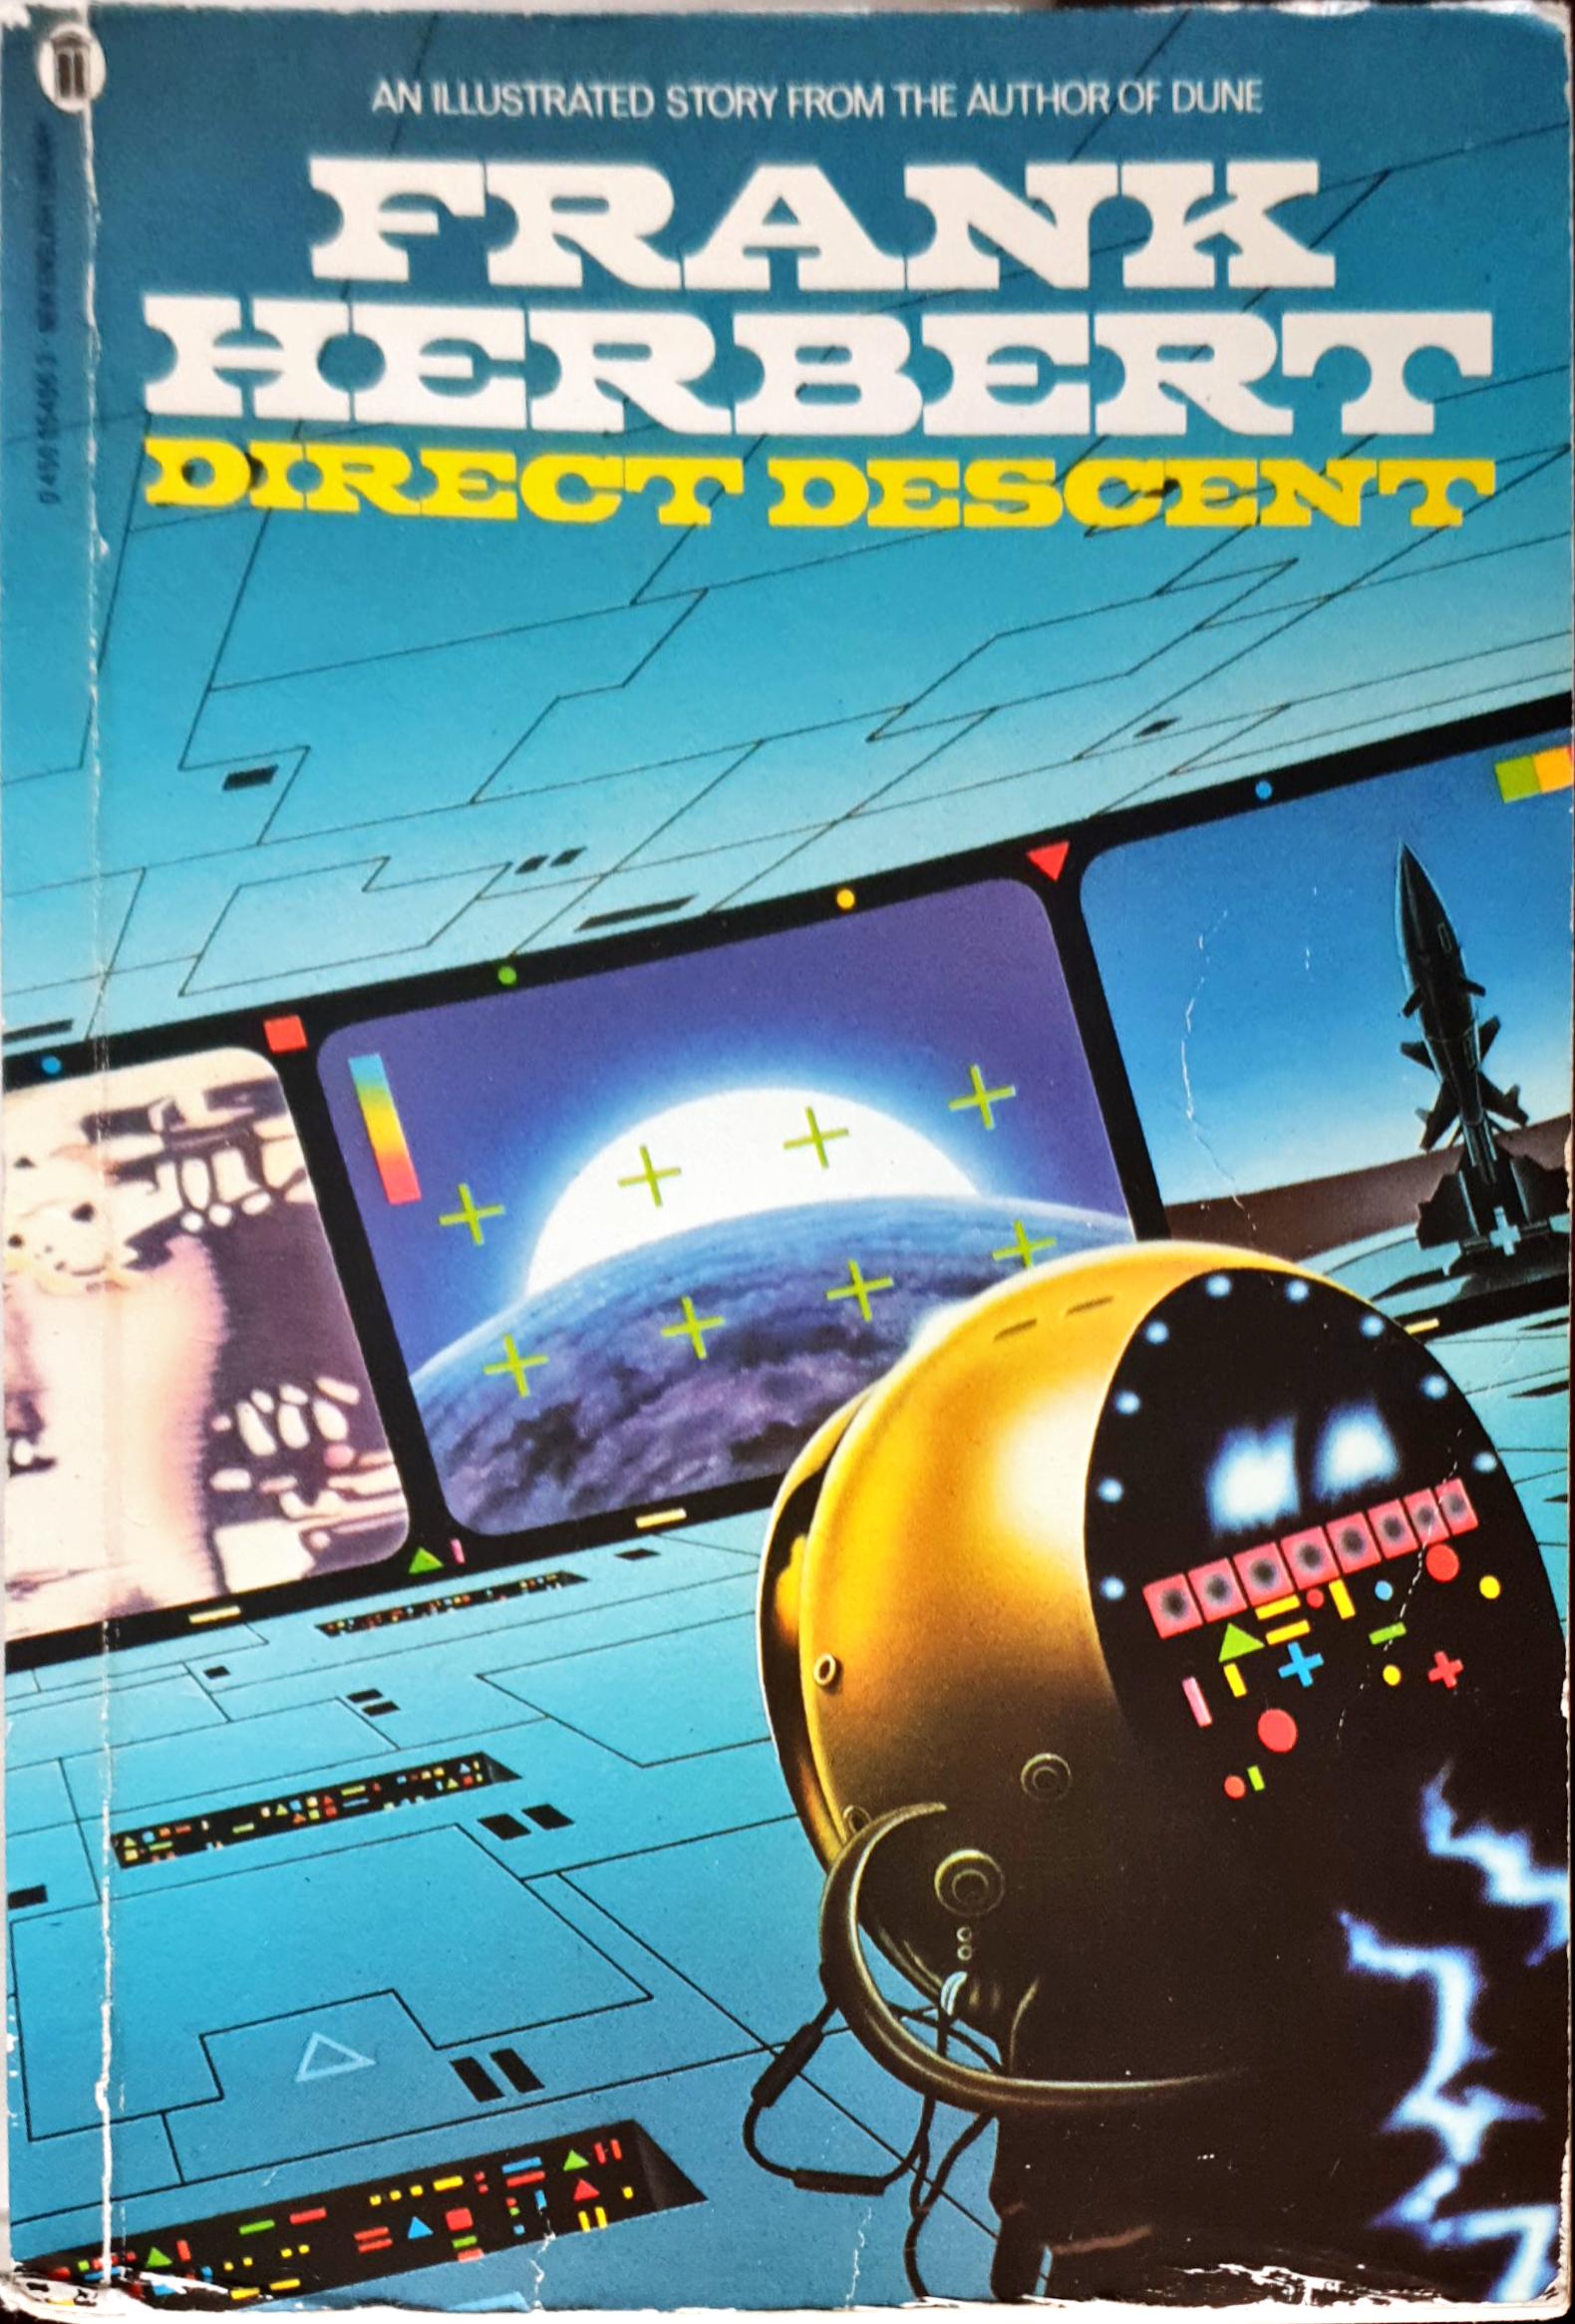 Direct Descent